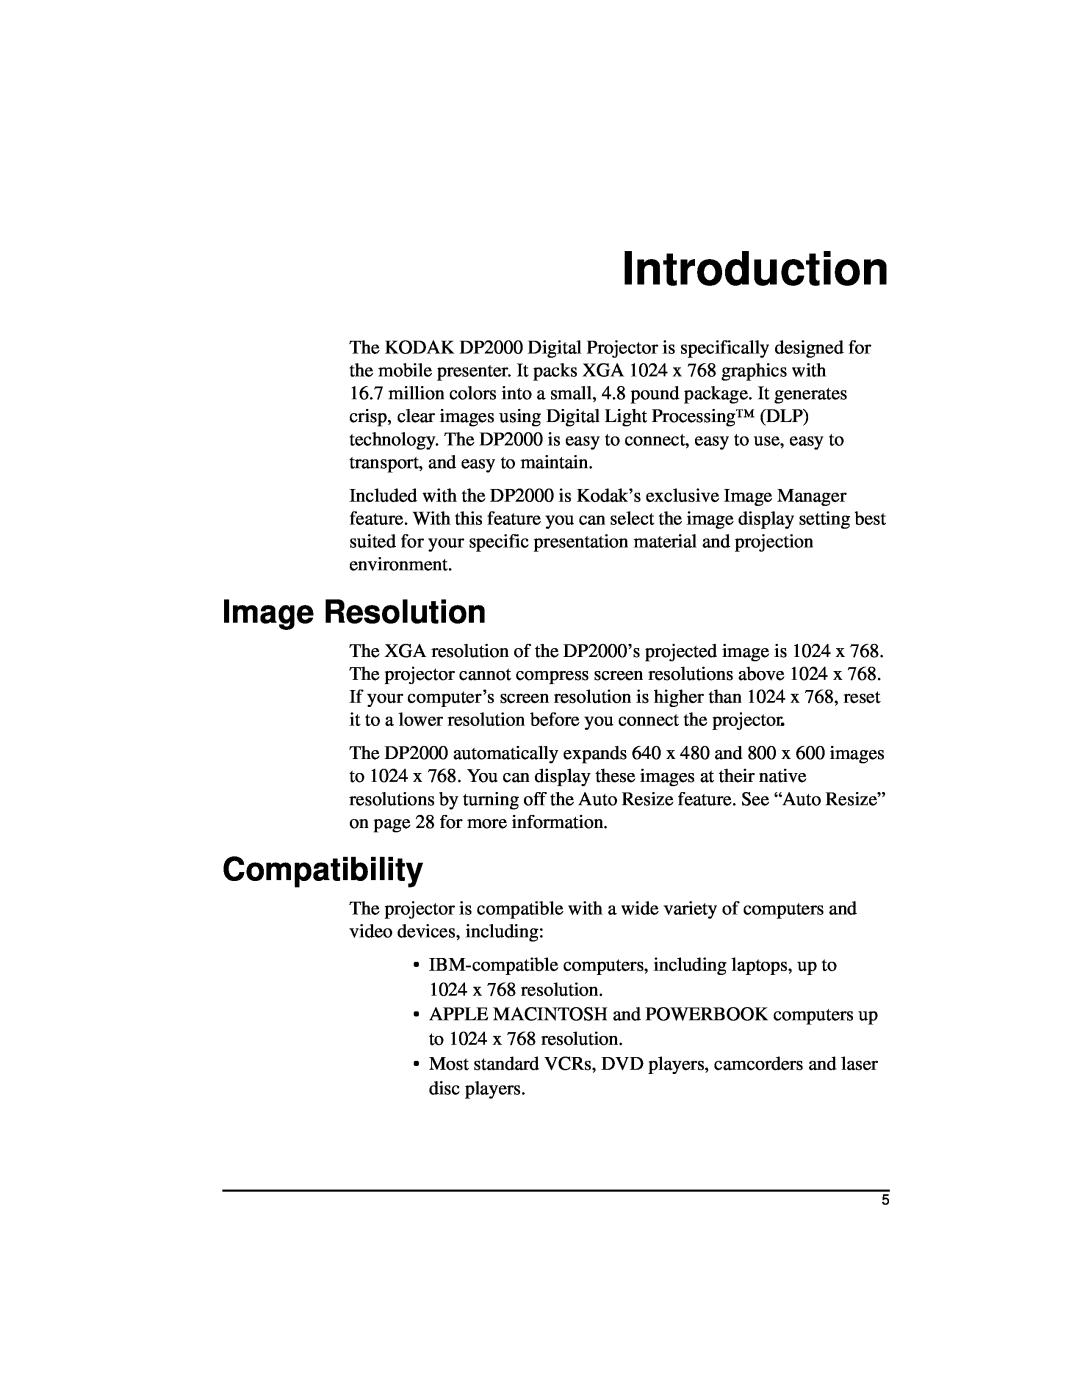 Kodak DP2000 manual Introduction, Image Resolution, Compatibility 